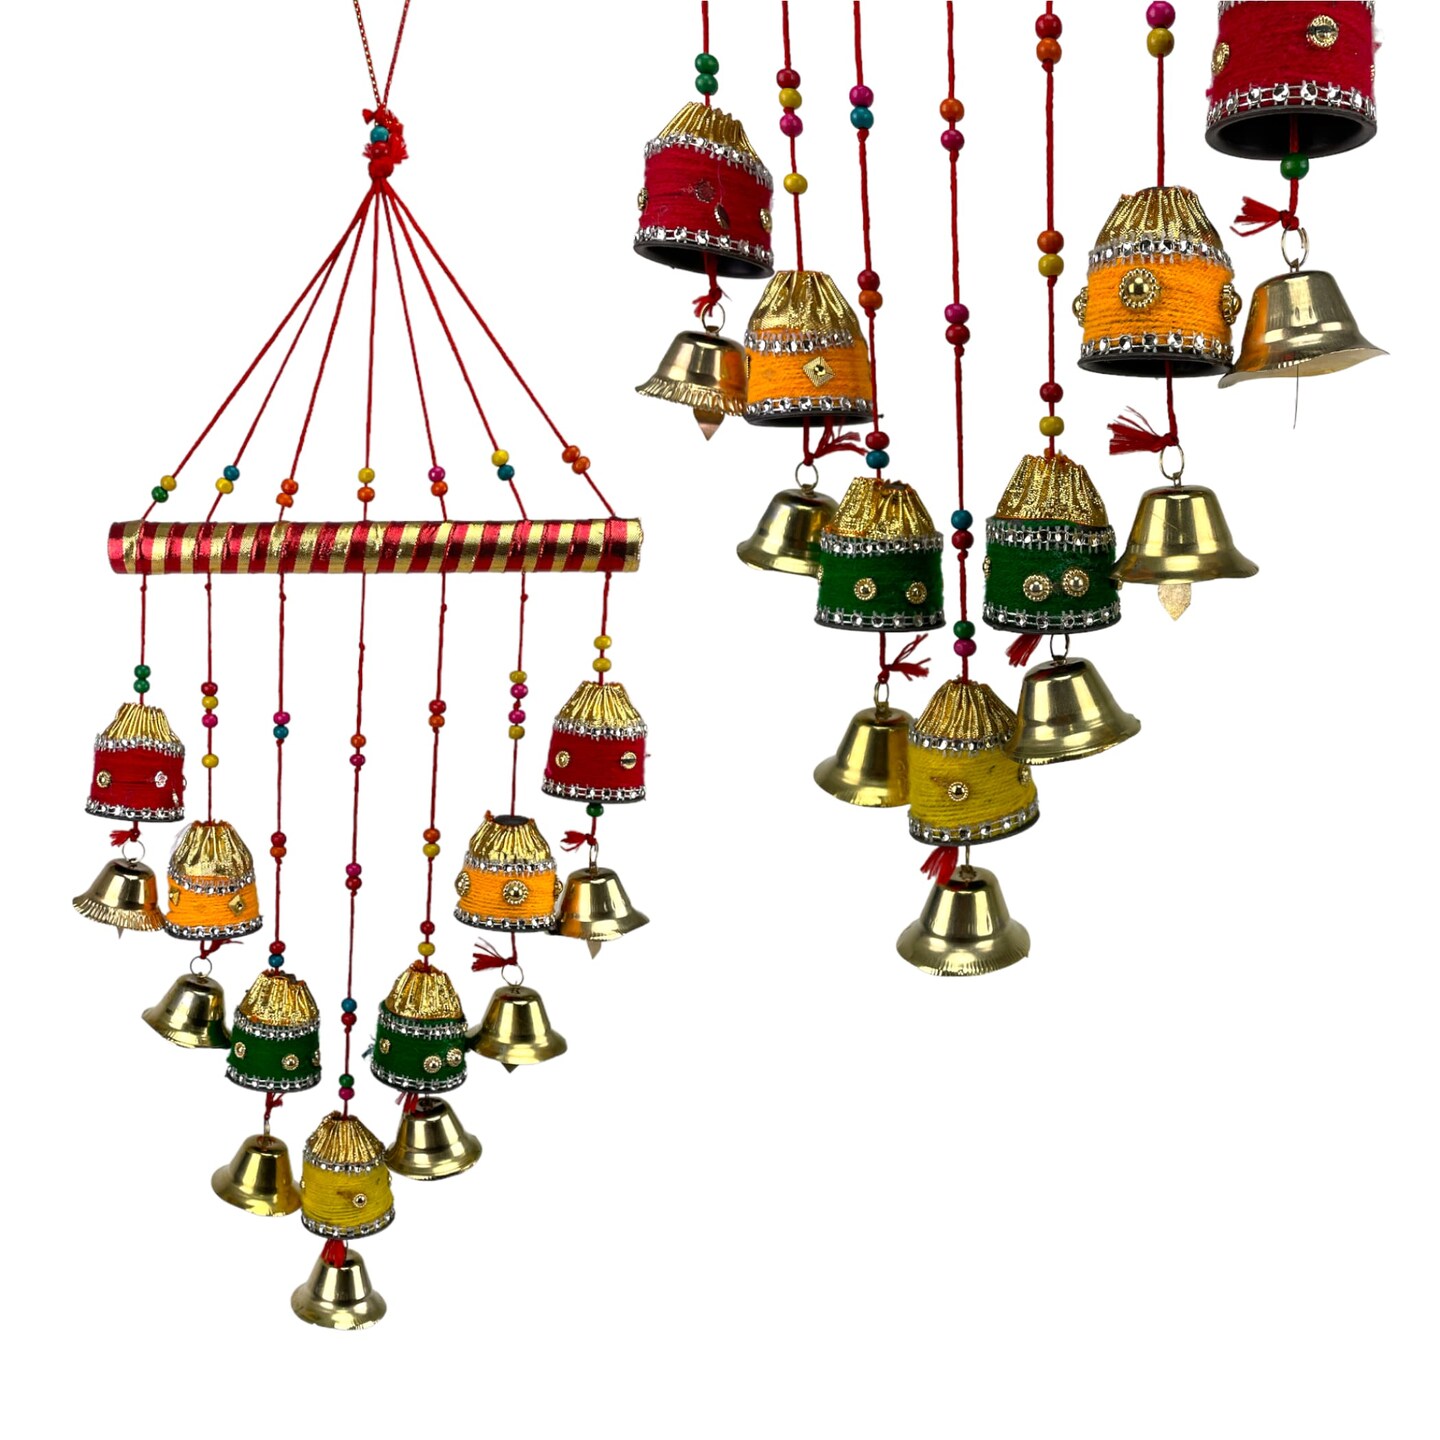 2 Ct Rajasthani Hanging, Home Decor, Indian Wedding Decorations, Door Hanging, Craft Garland, Japanese Wind Chimes, Tibetan Bells, Chris6tmas Bell, Brass Wall String